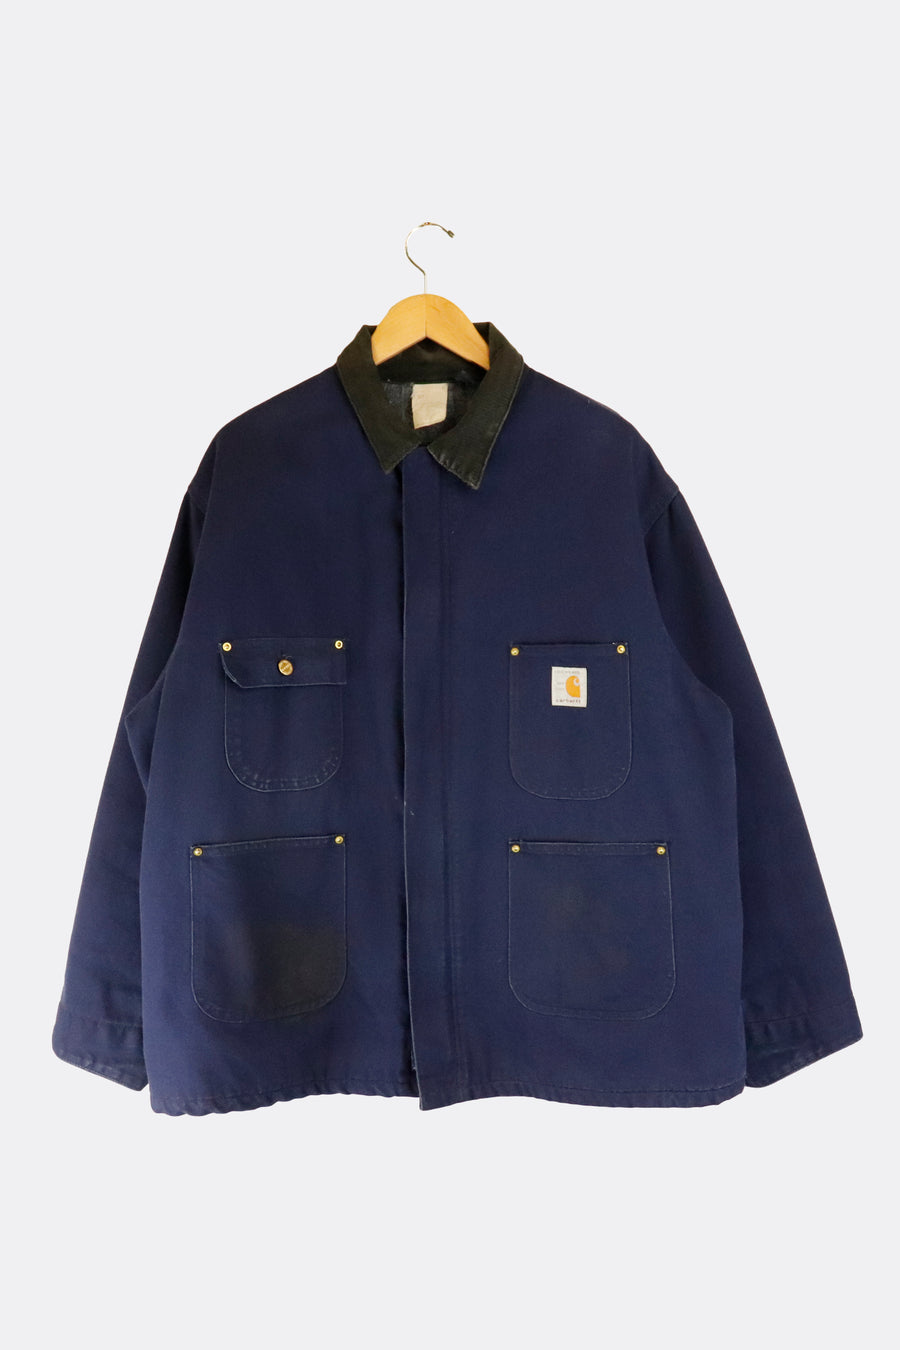 Vintage Carhartt Blanket Lined 100year Patch Chore Blue Jacket Sz 2XL